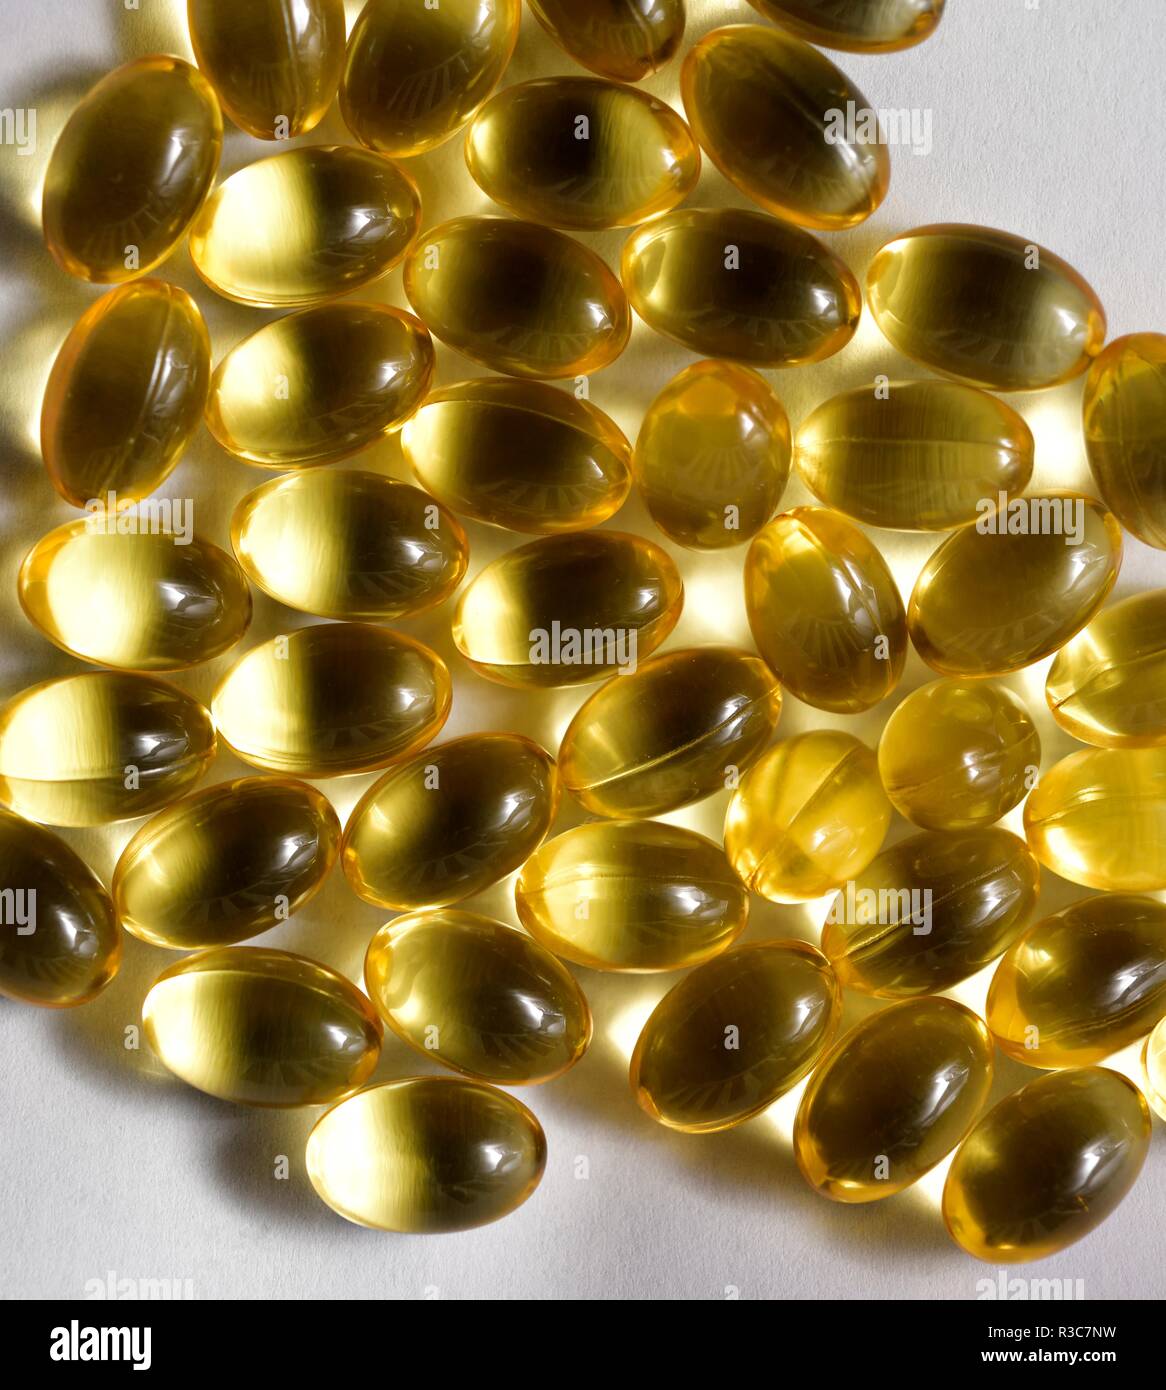 Seven seas cod liver oil omega 3 fish oil plus capsules Stock Photo - Alamy